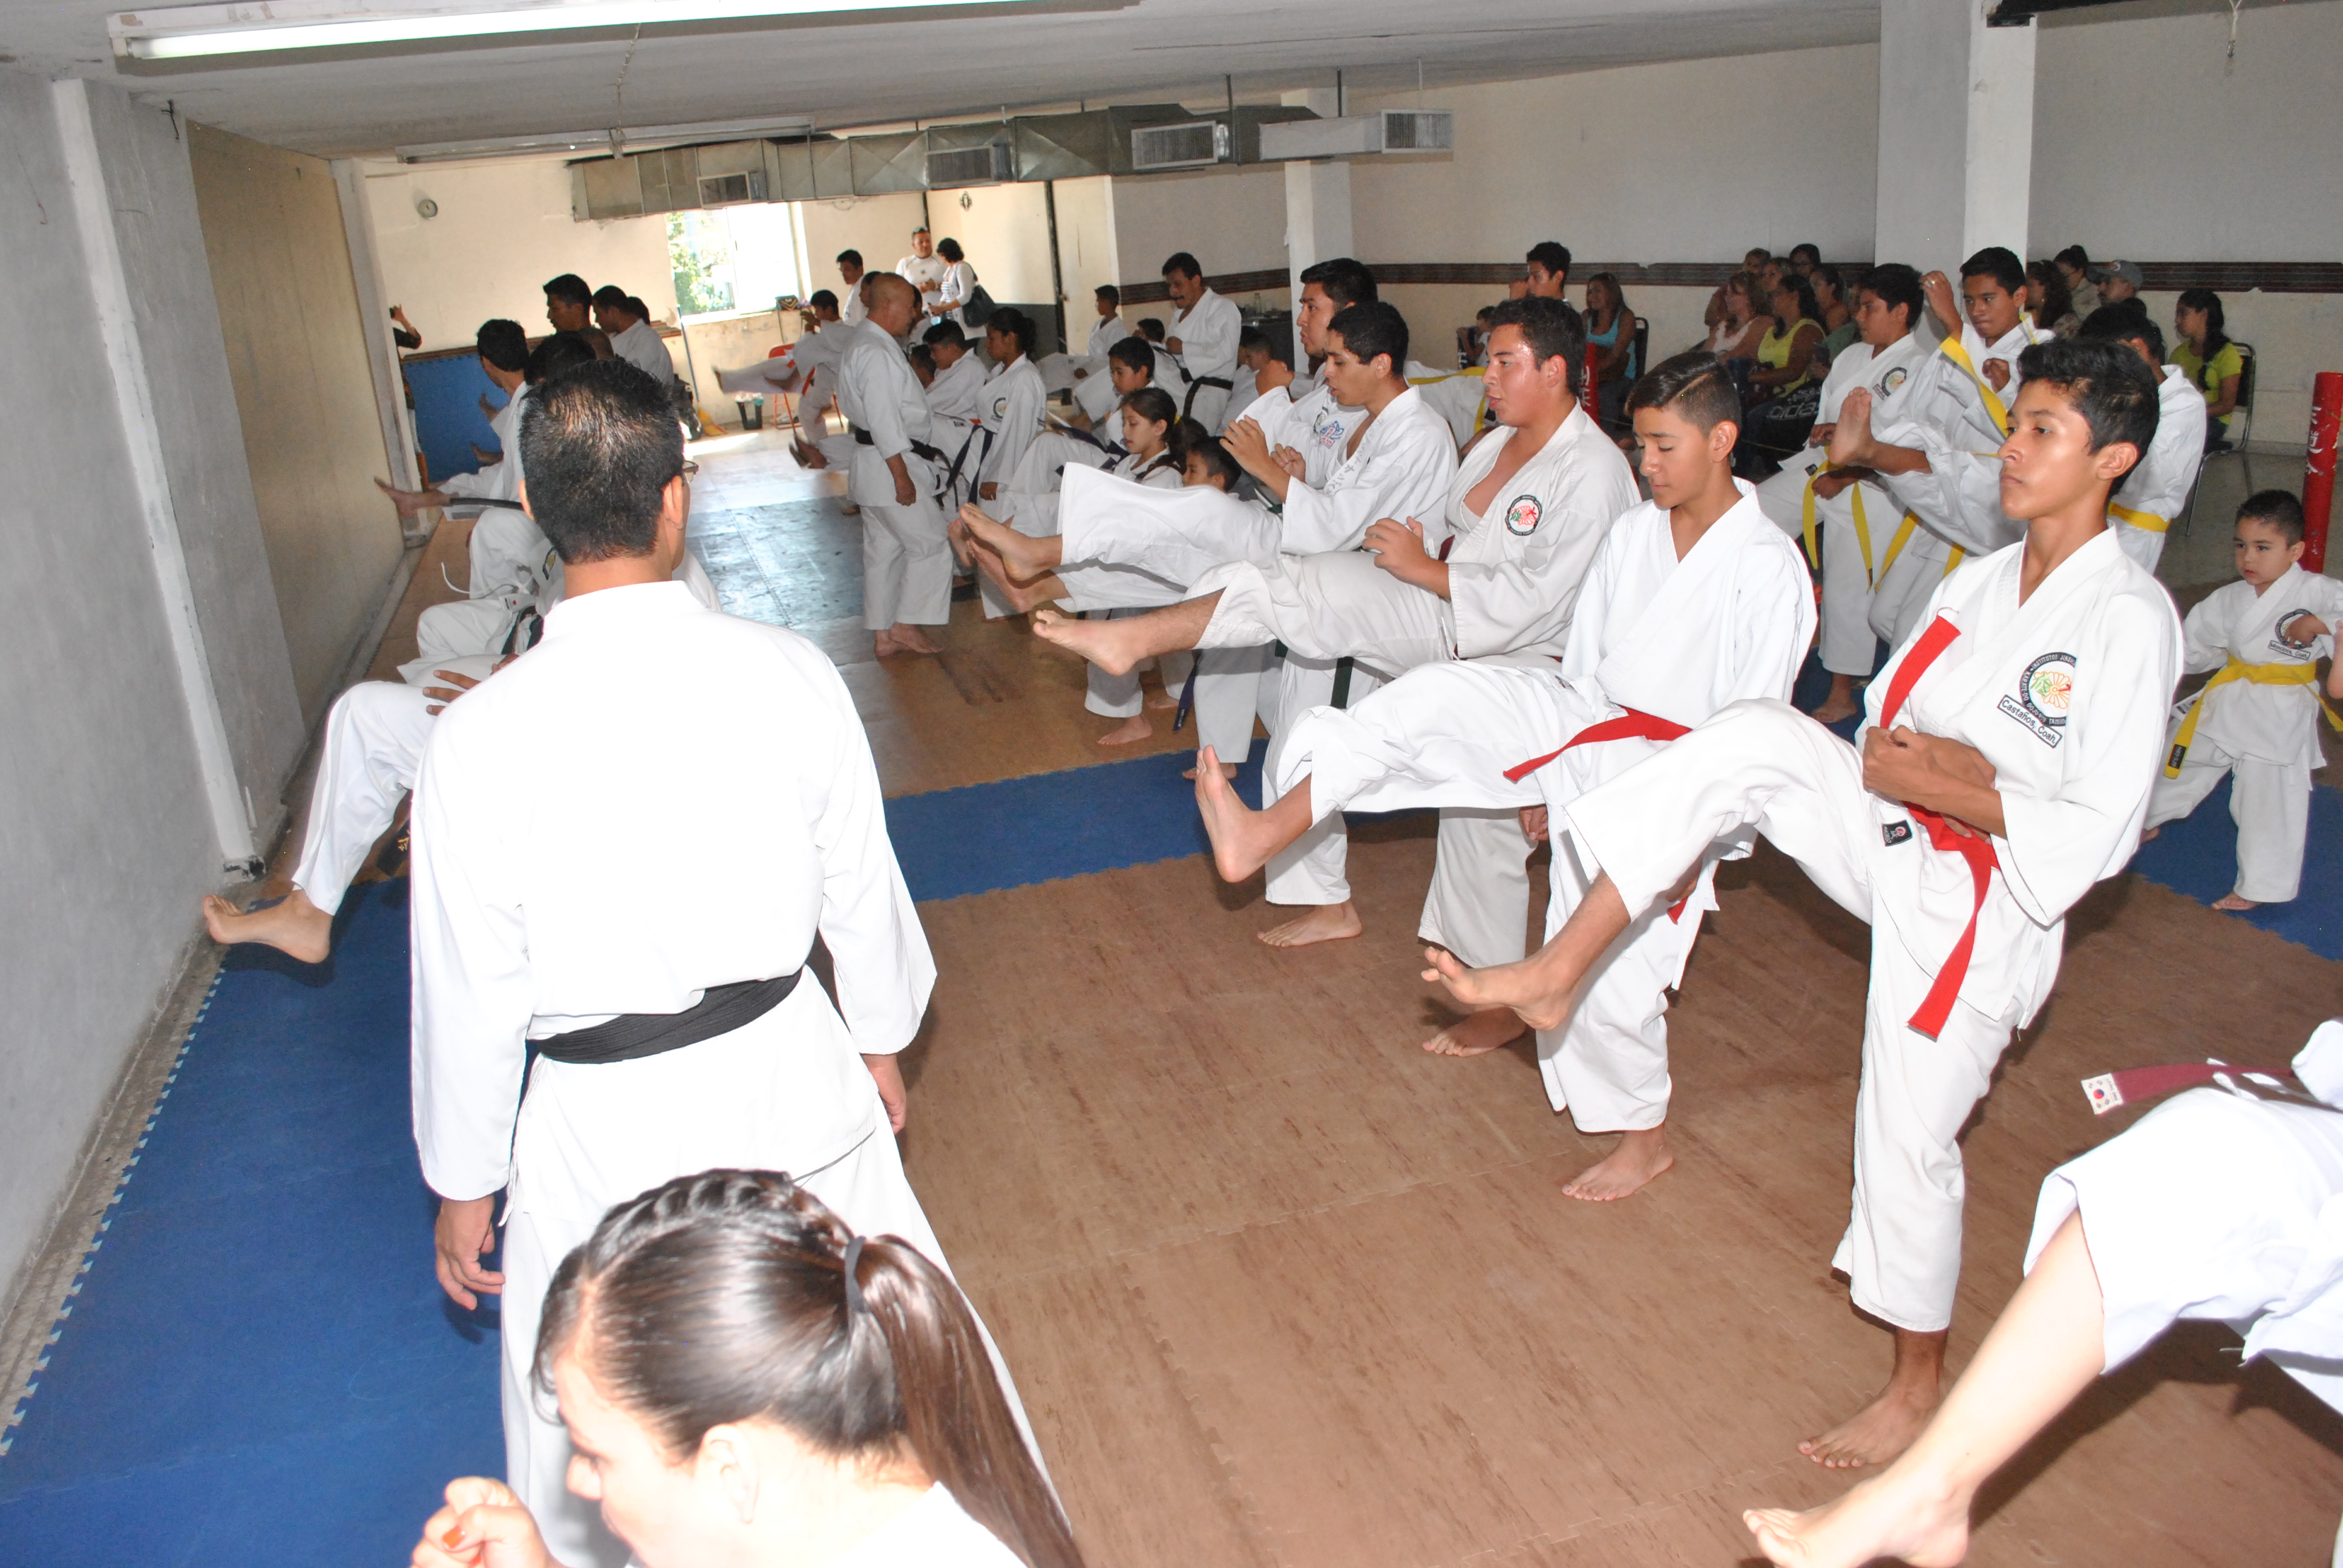 Realizan seminario de Karate